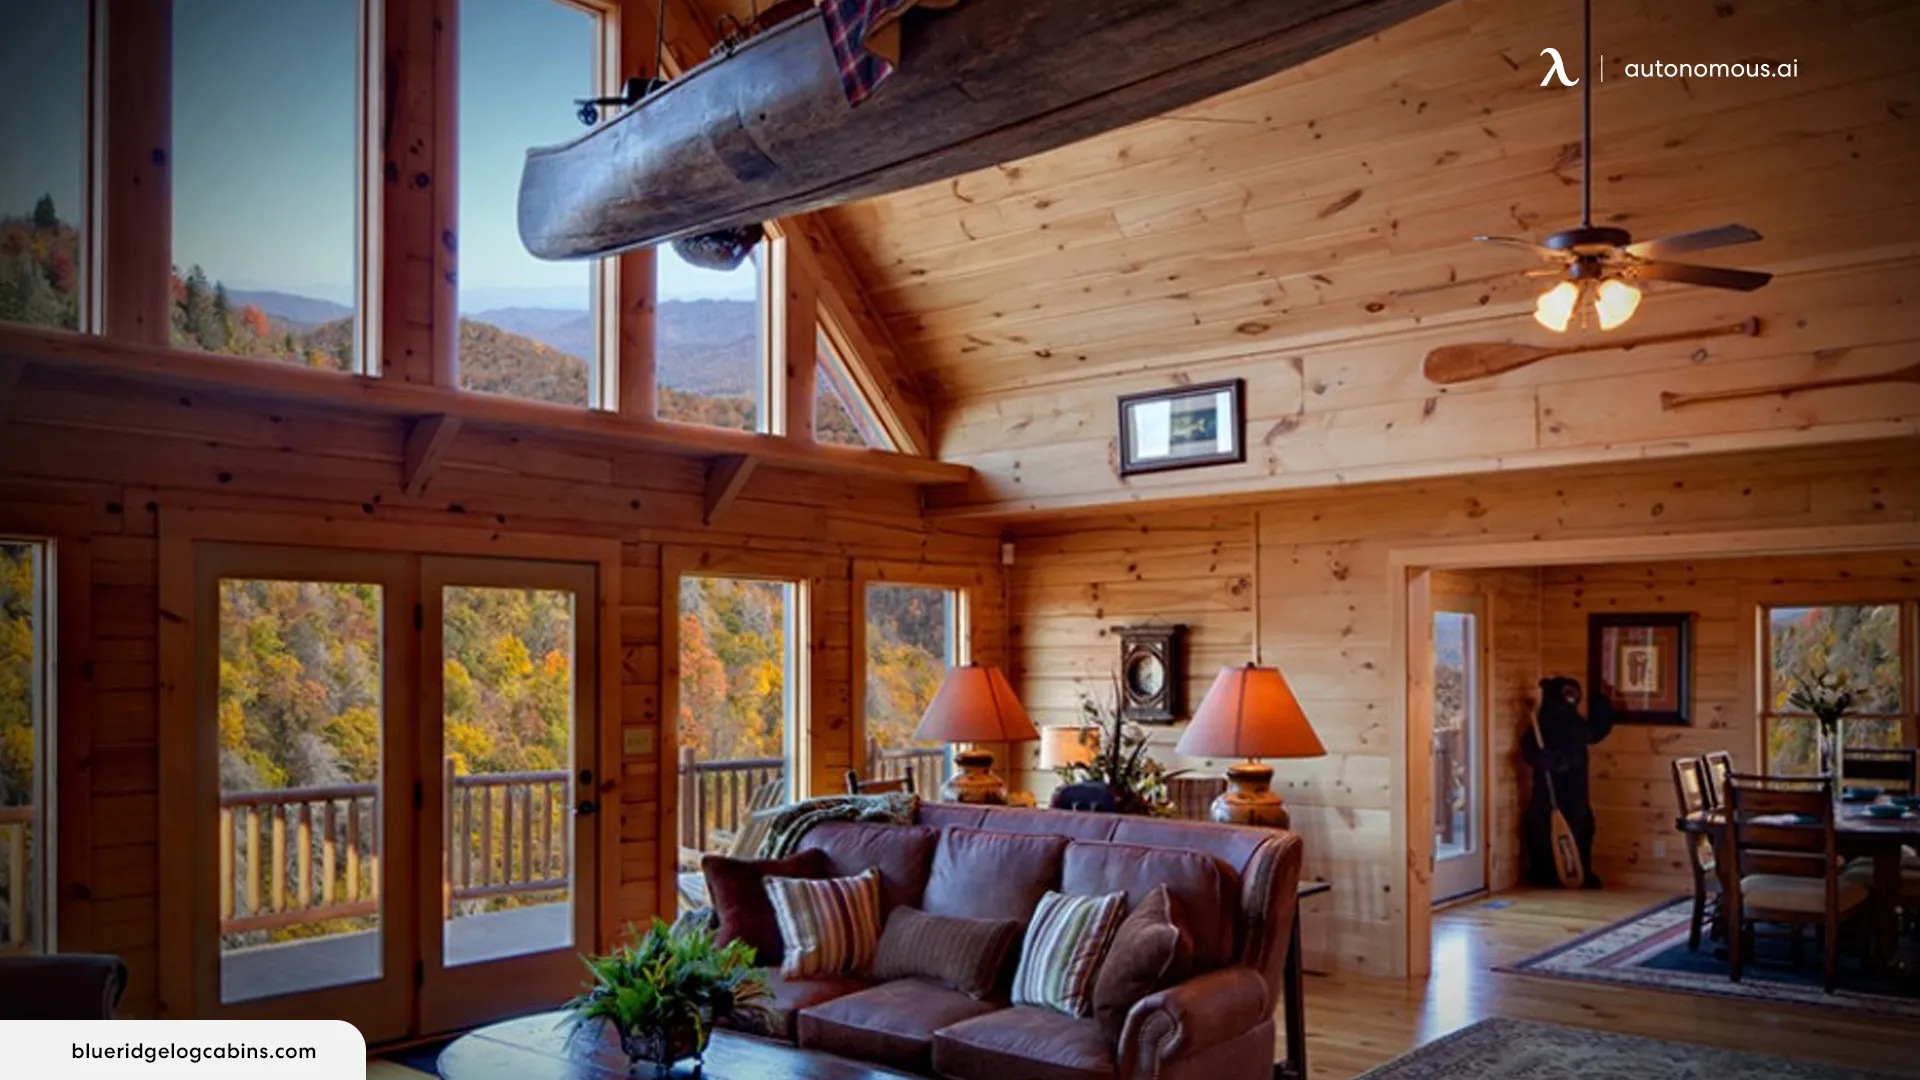 Blue Ridge Log Cabins - prefab log cabins in North Carolina